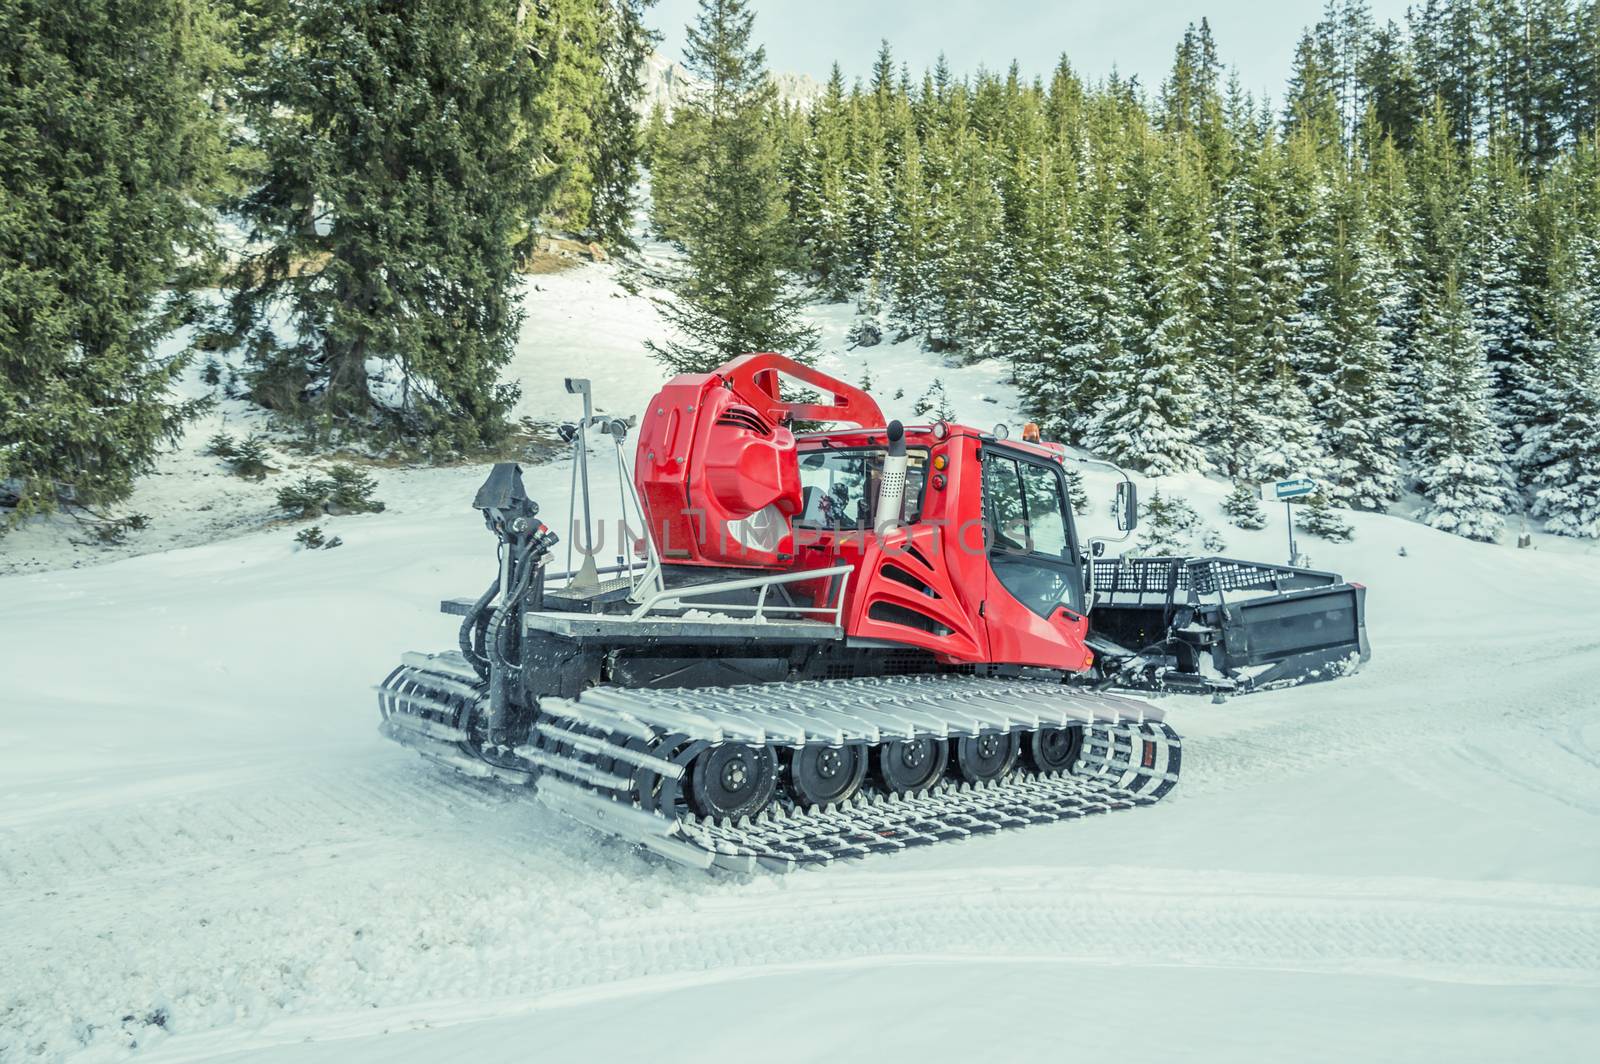 Winter image with a modern snow groomer machine, captured in the Austrian Alps, near the village Ehrwald, district Reutte in Tirol